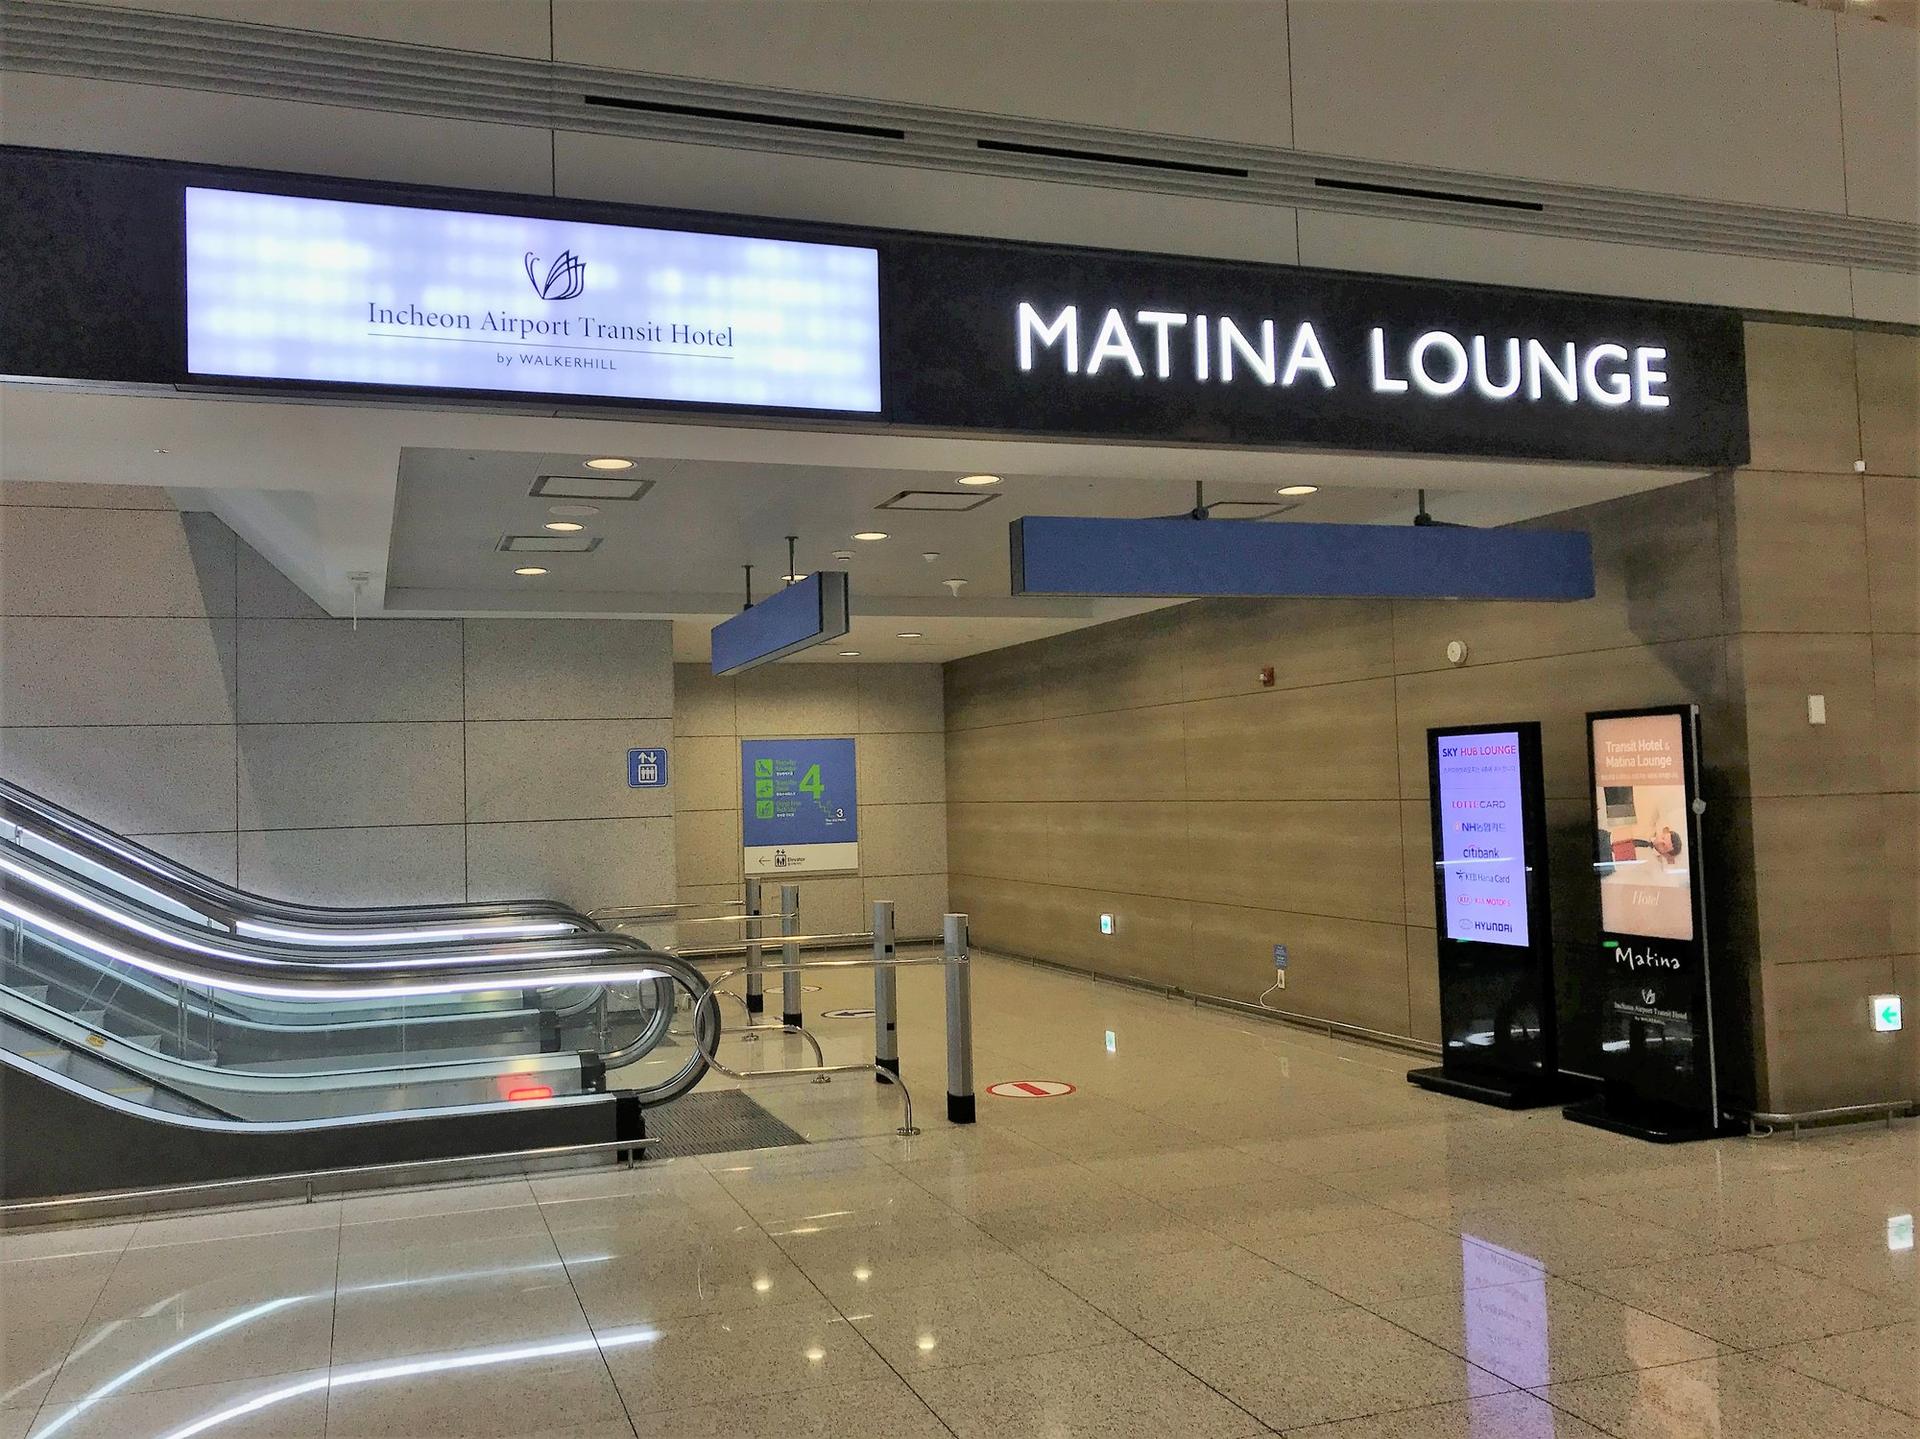 MATINA Lounge West (Gate 43) image 27 of 36